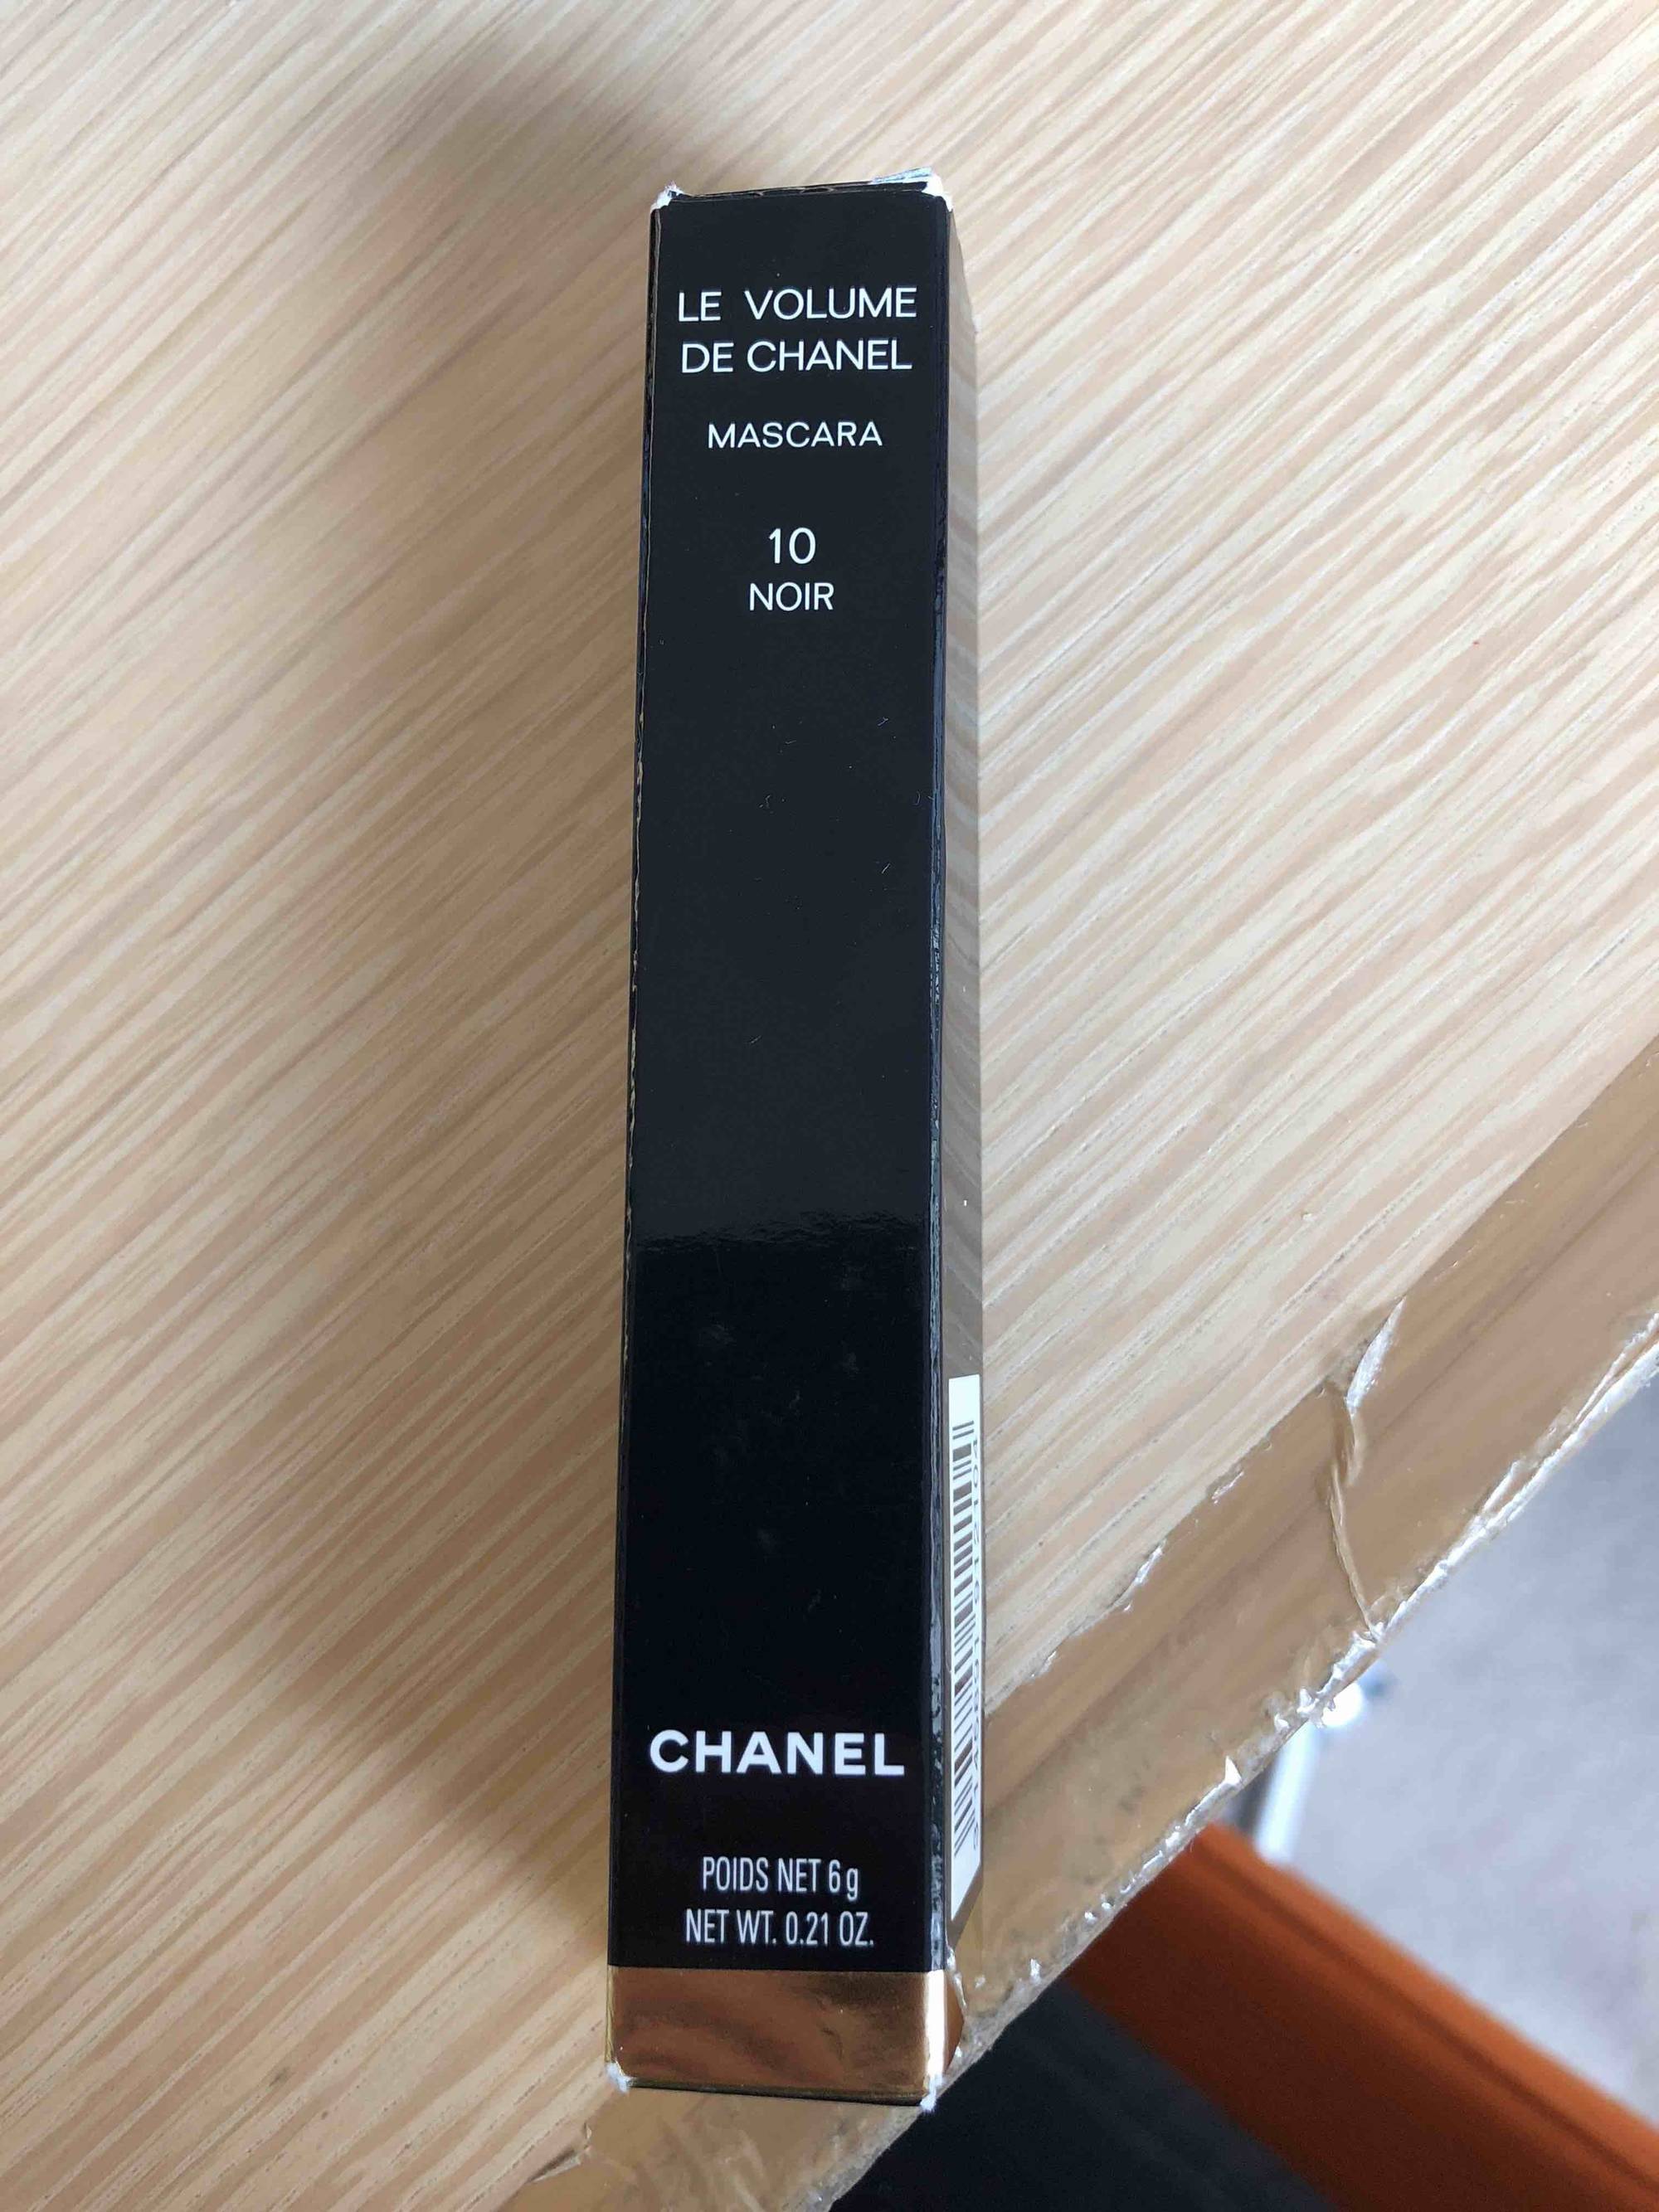 CHANEL - Le volume de chanel - Mascara 10 noir